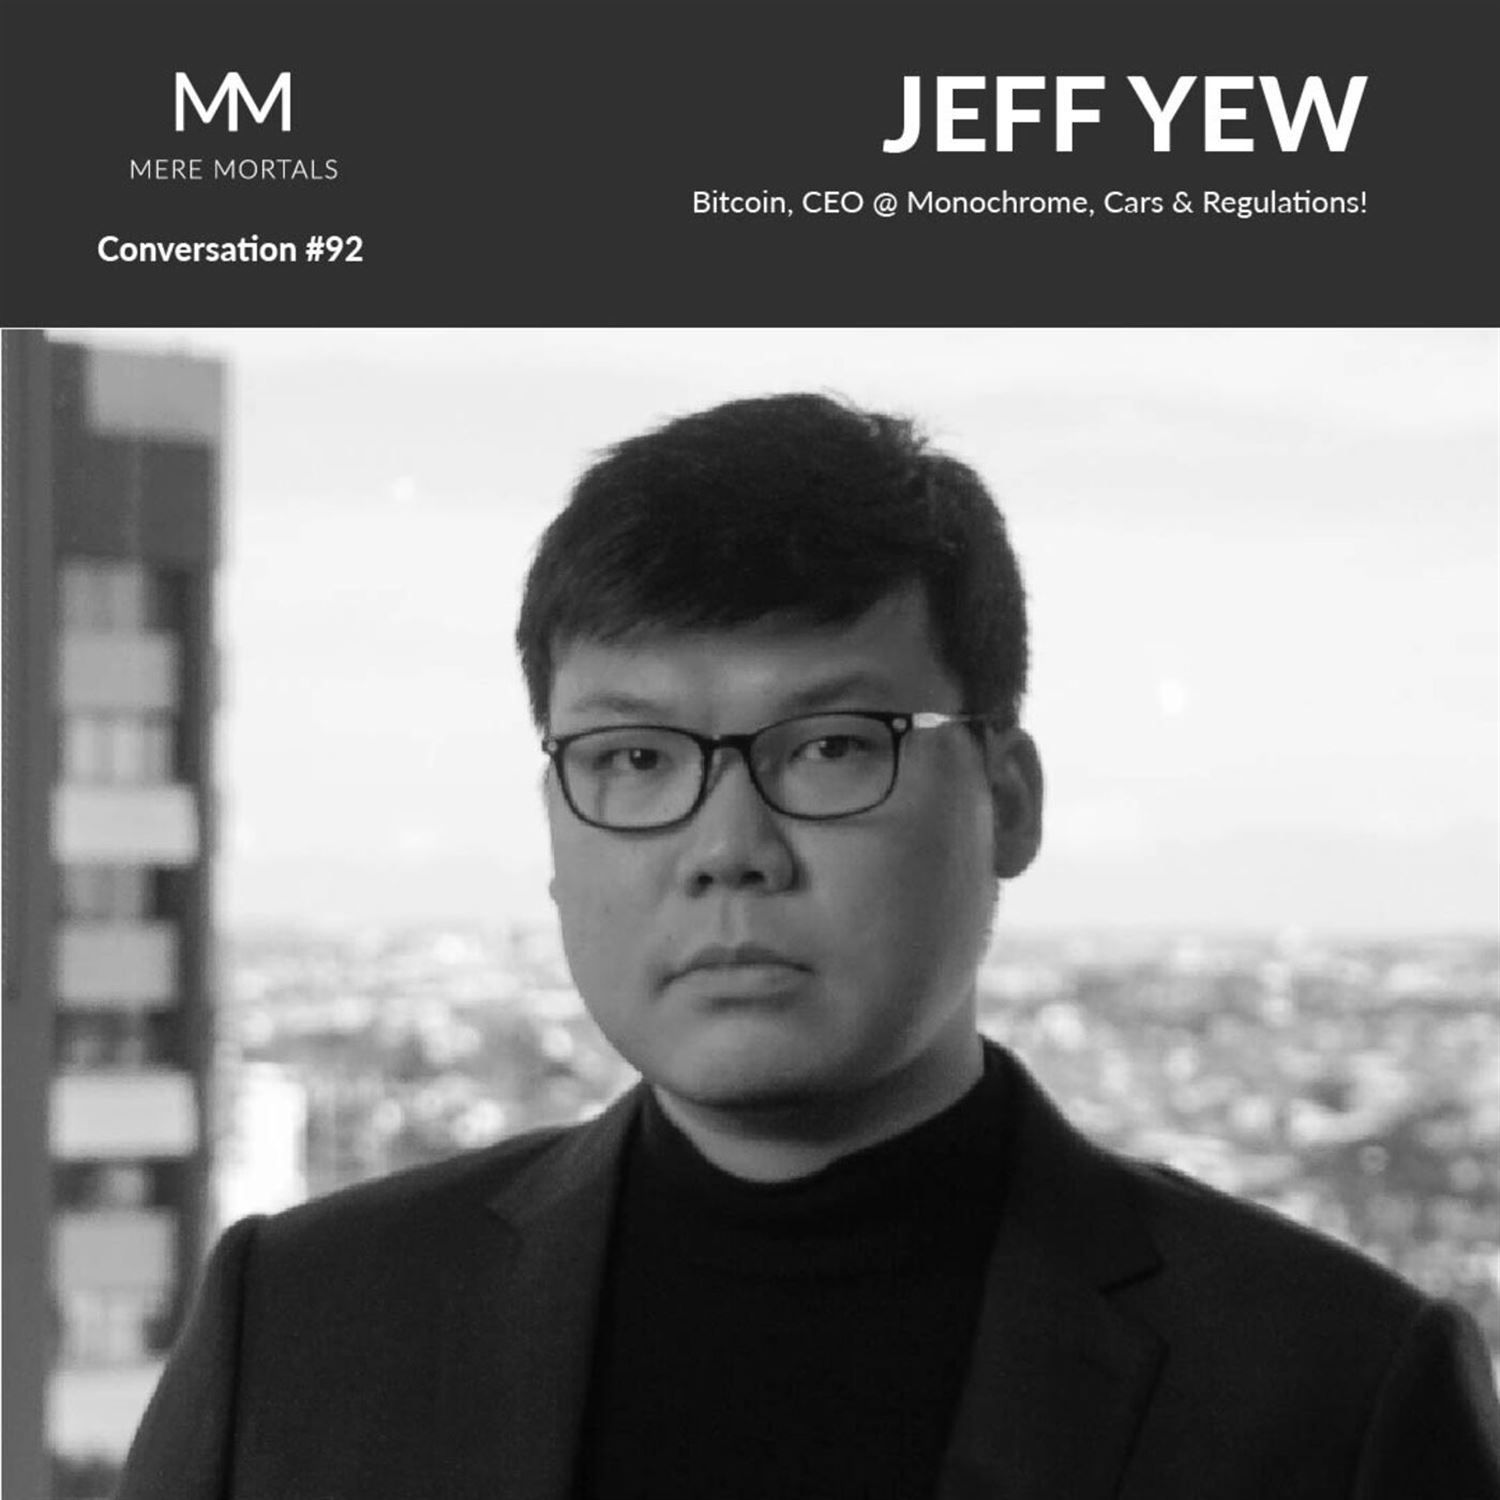 JEFF YEW | Bitcoin, CEO @ Monochrome, Cars & Regulations!